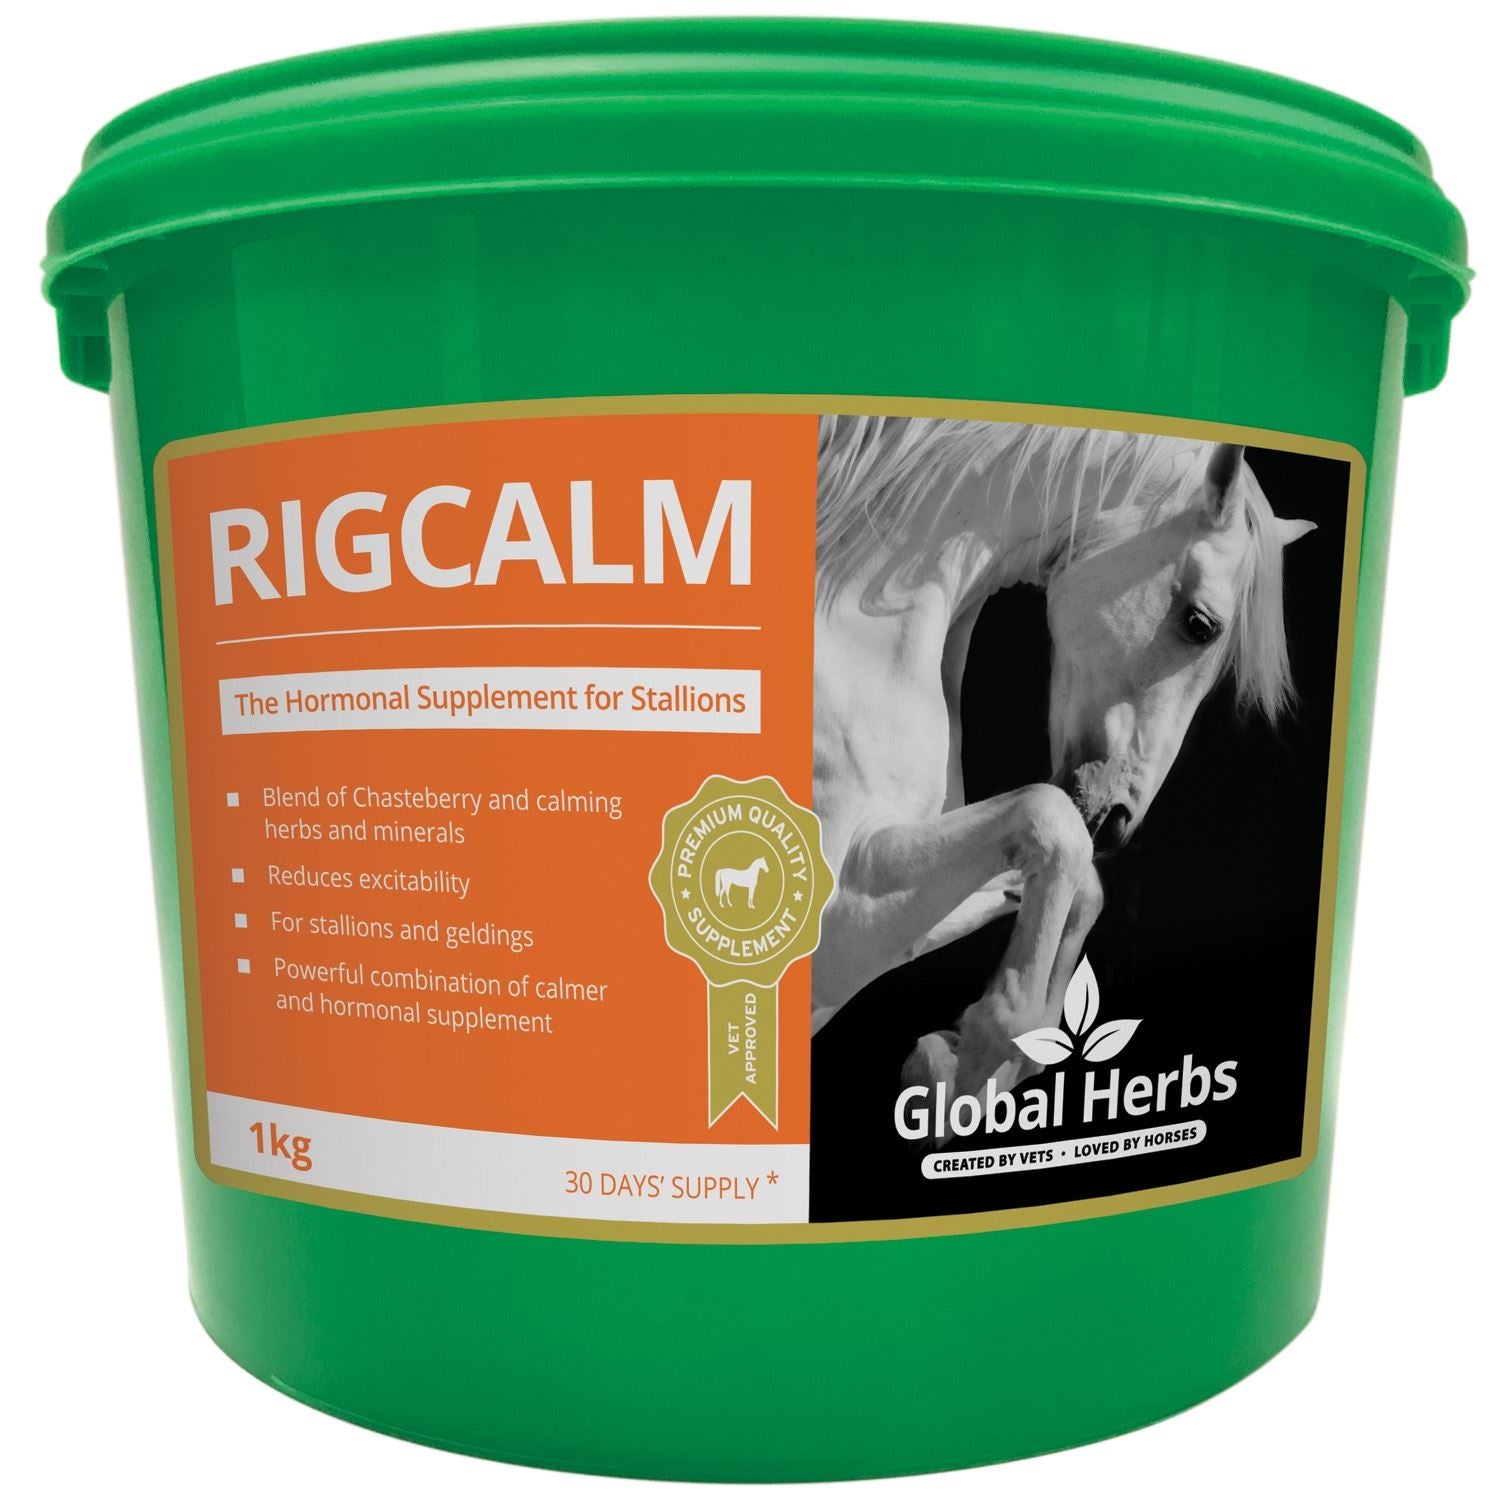 Global Herbs Rigcalm for managing riggy behavior in geldings